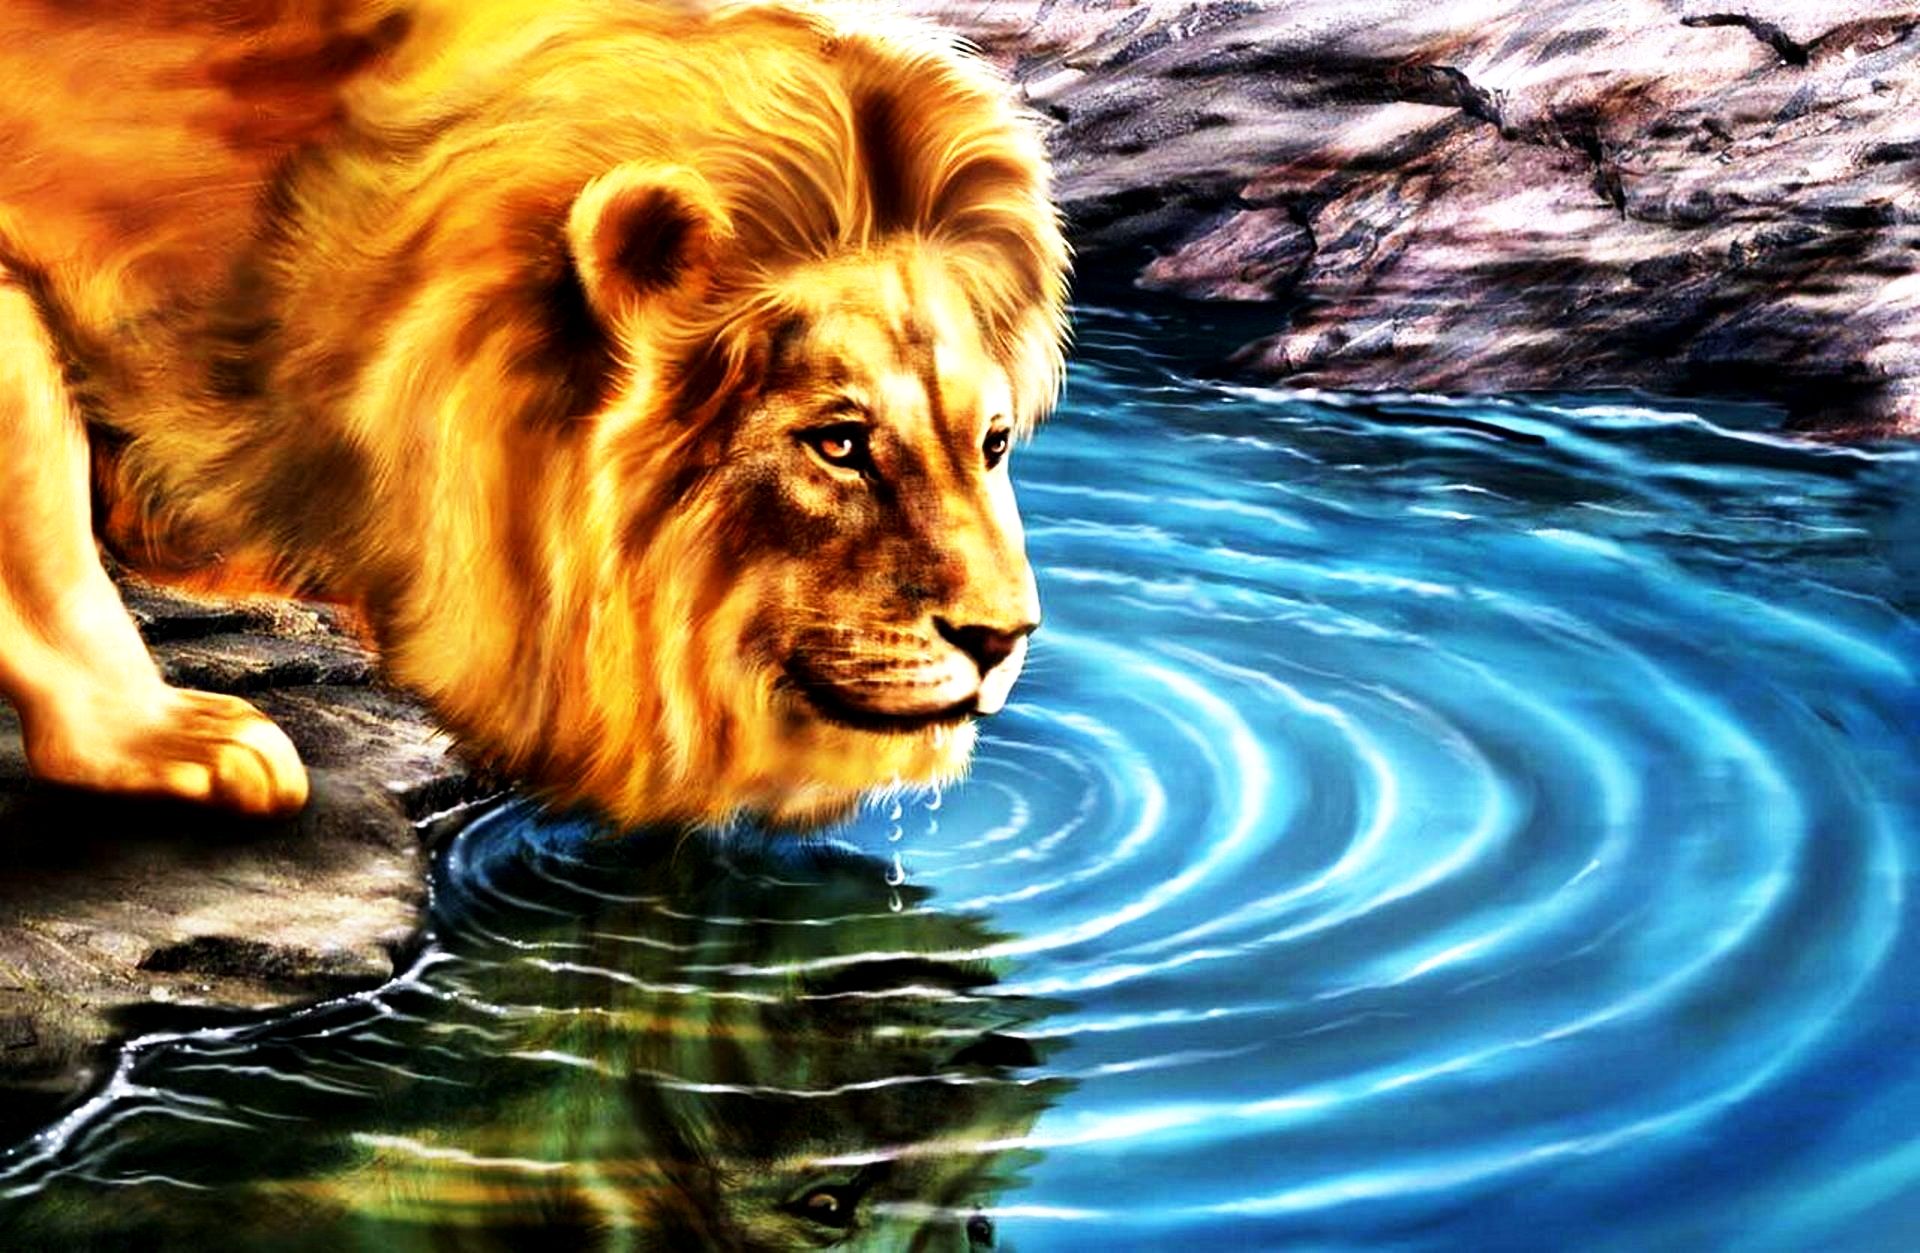 3D Wallpaper Desktop Backgrounds Lion - WallpaperSafari